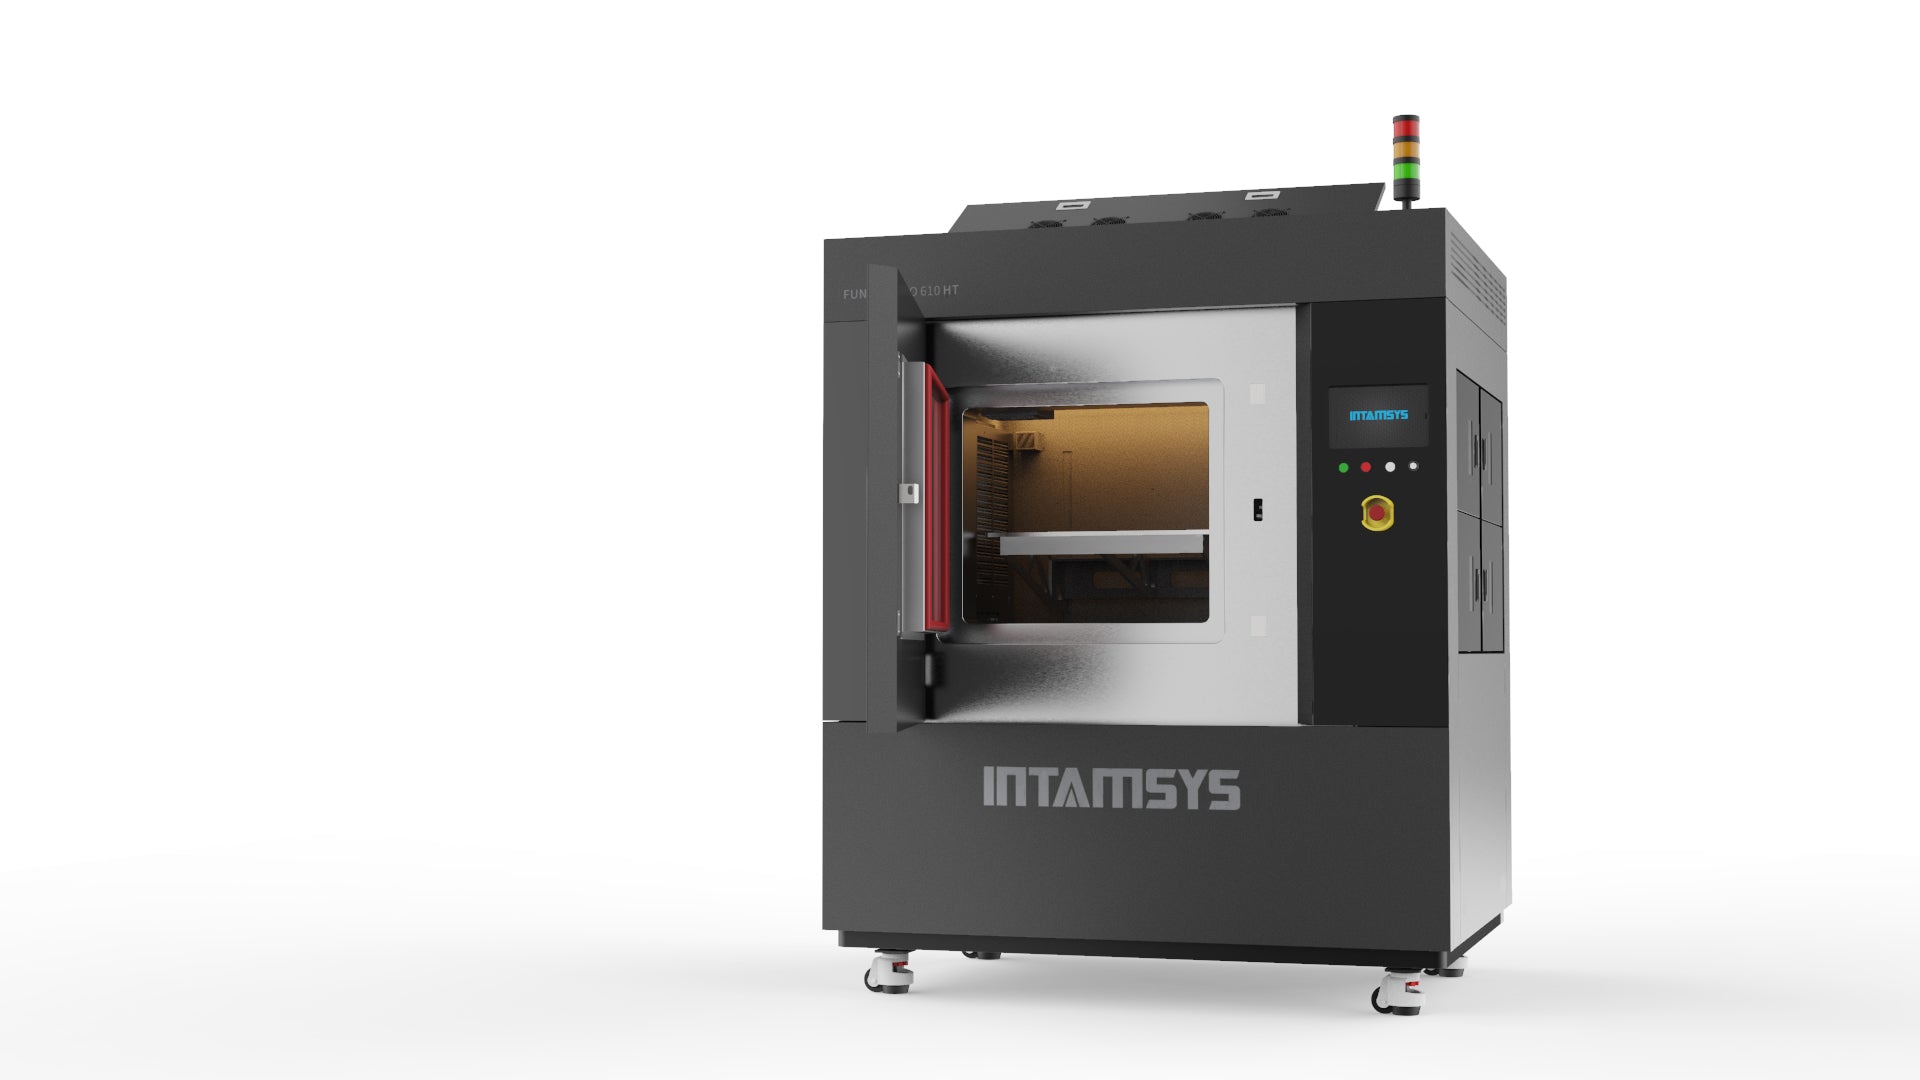 Funmat Pro 610HT 3D Printers Intamsys - Indicate Technologies